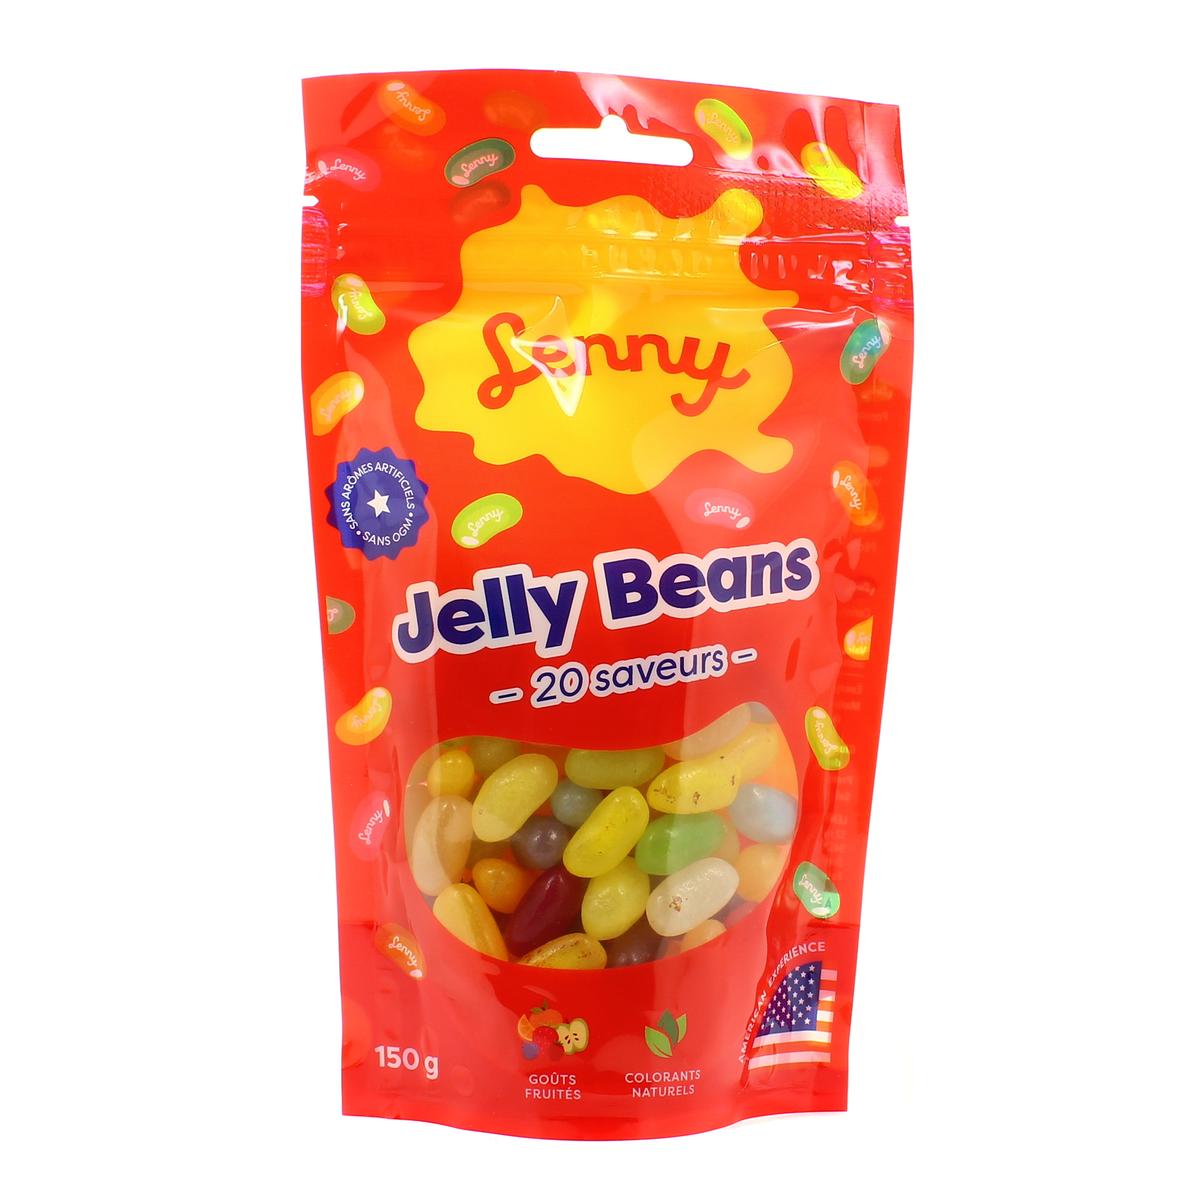 Bonbons Jelly Belly 49 saveurs